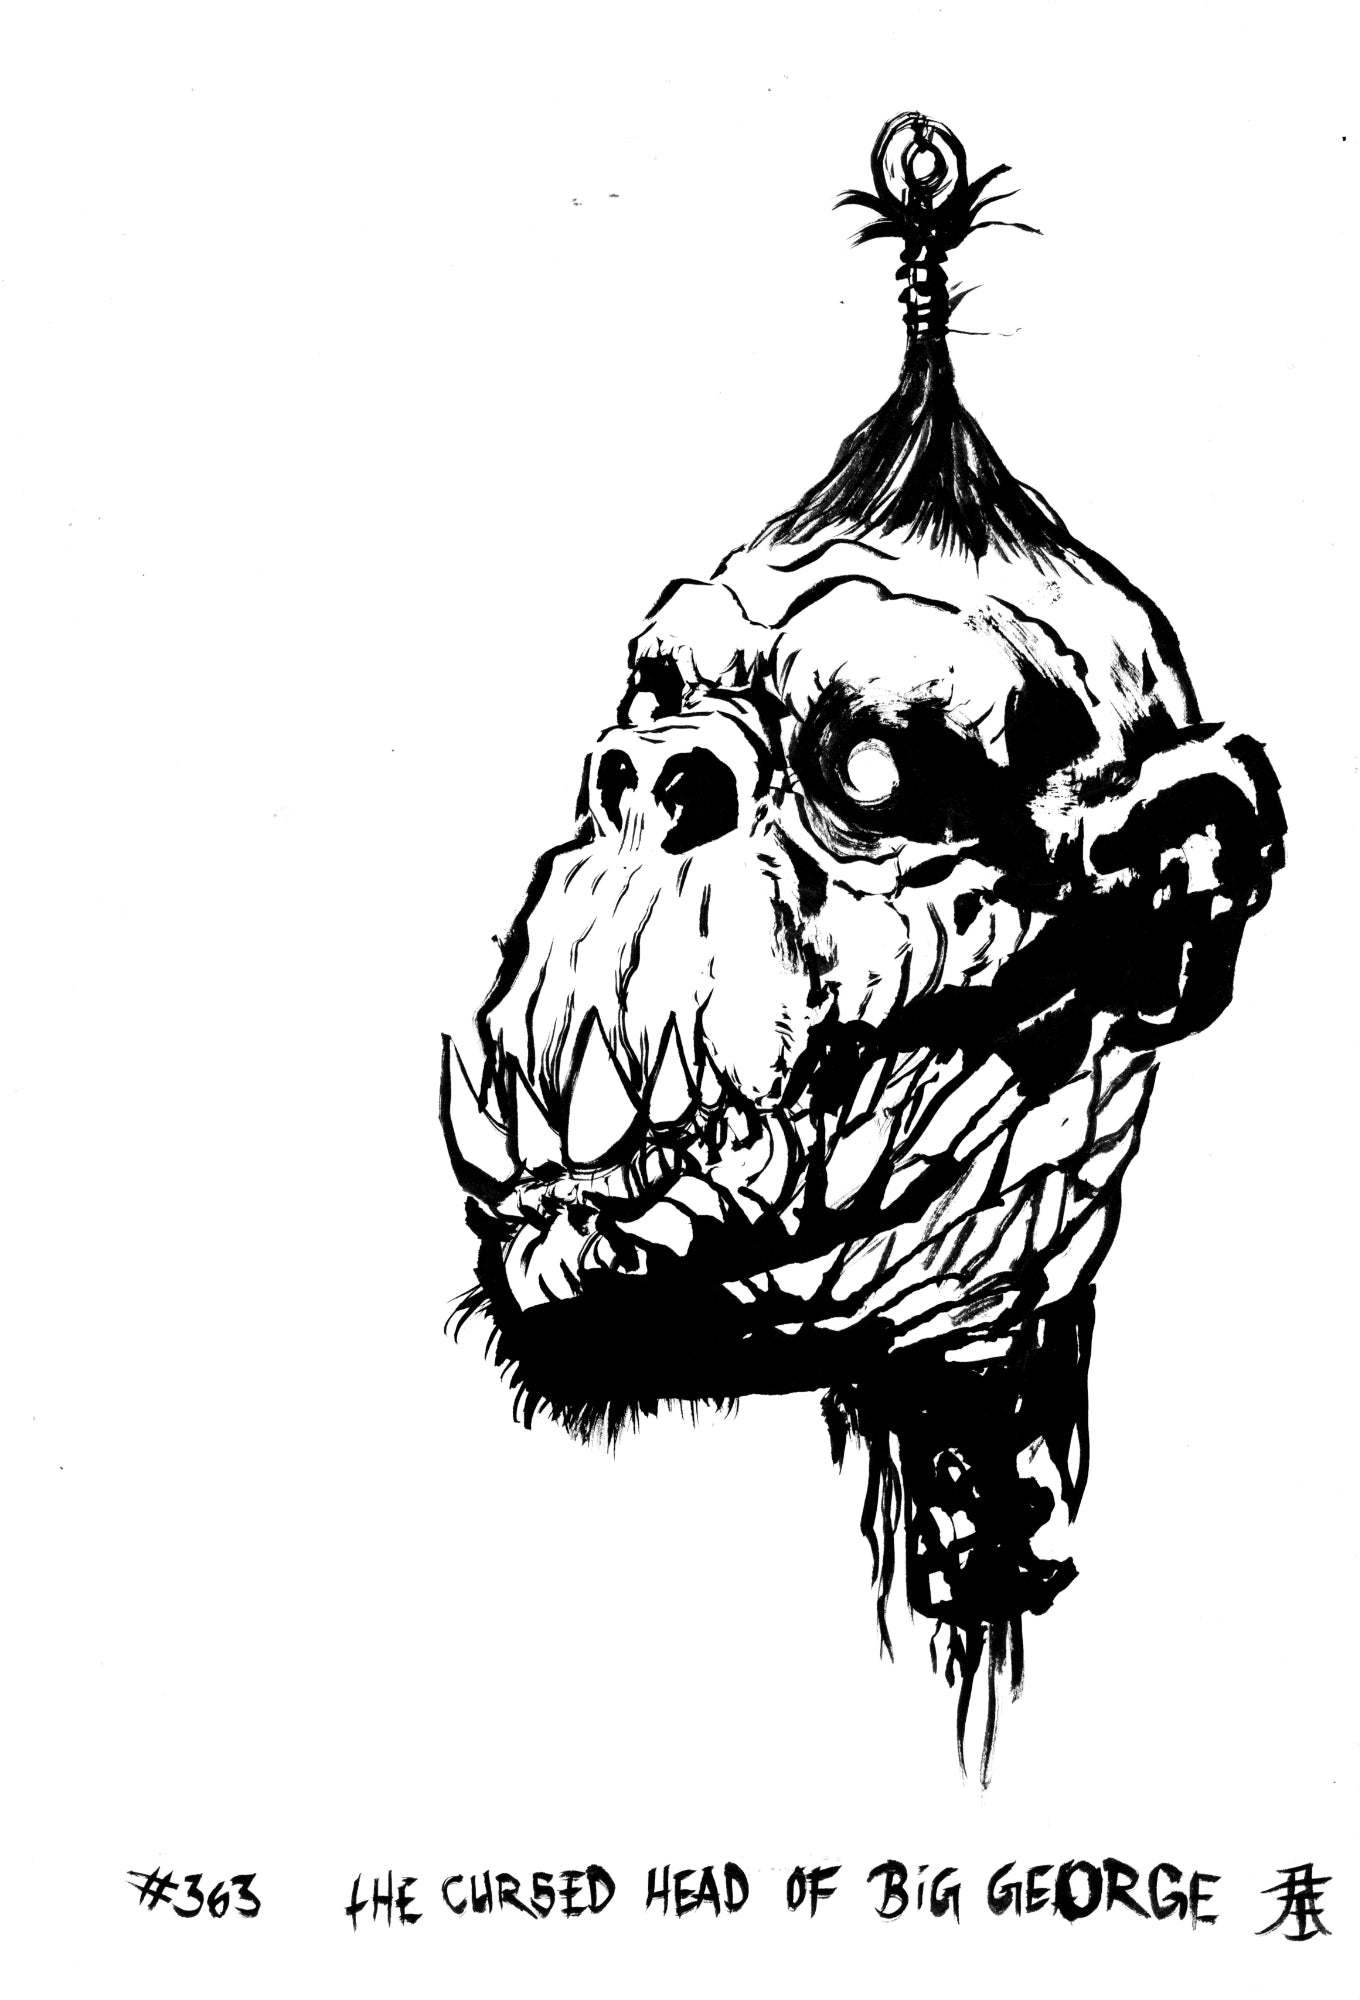 # 363 - The Cursed Head of Big George